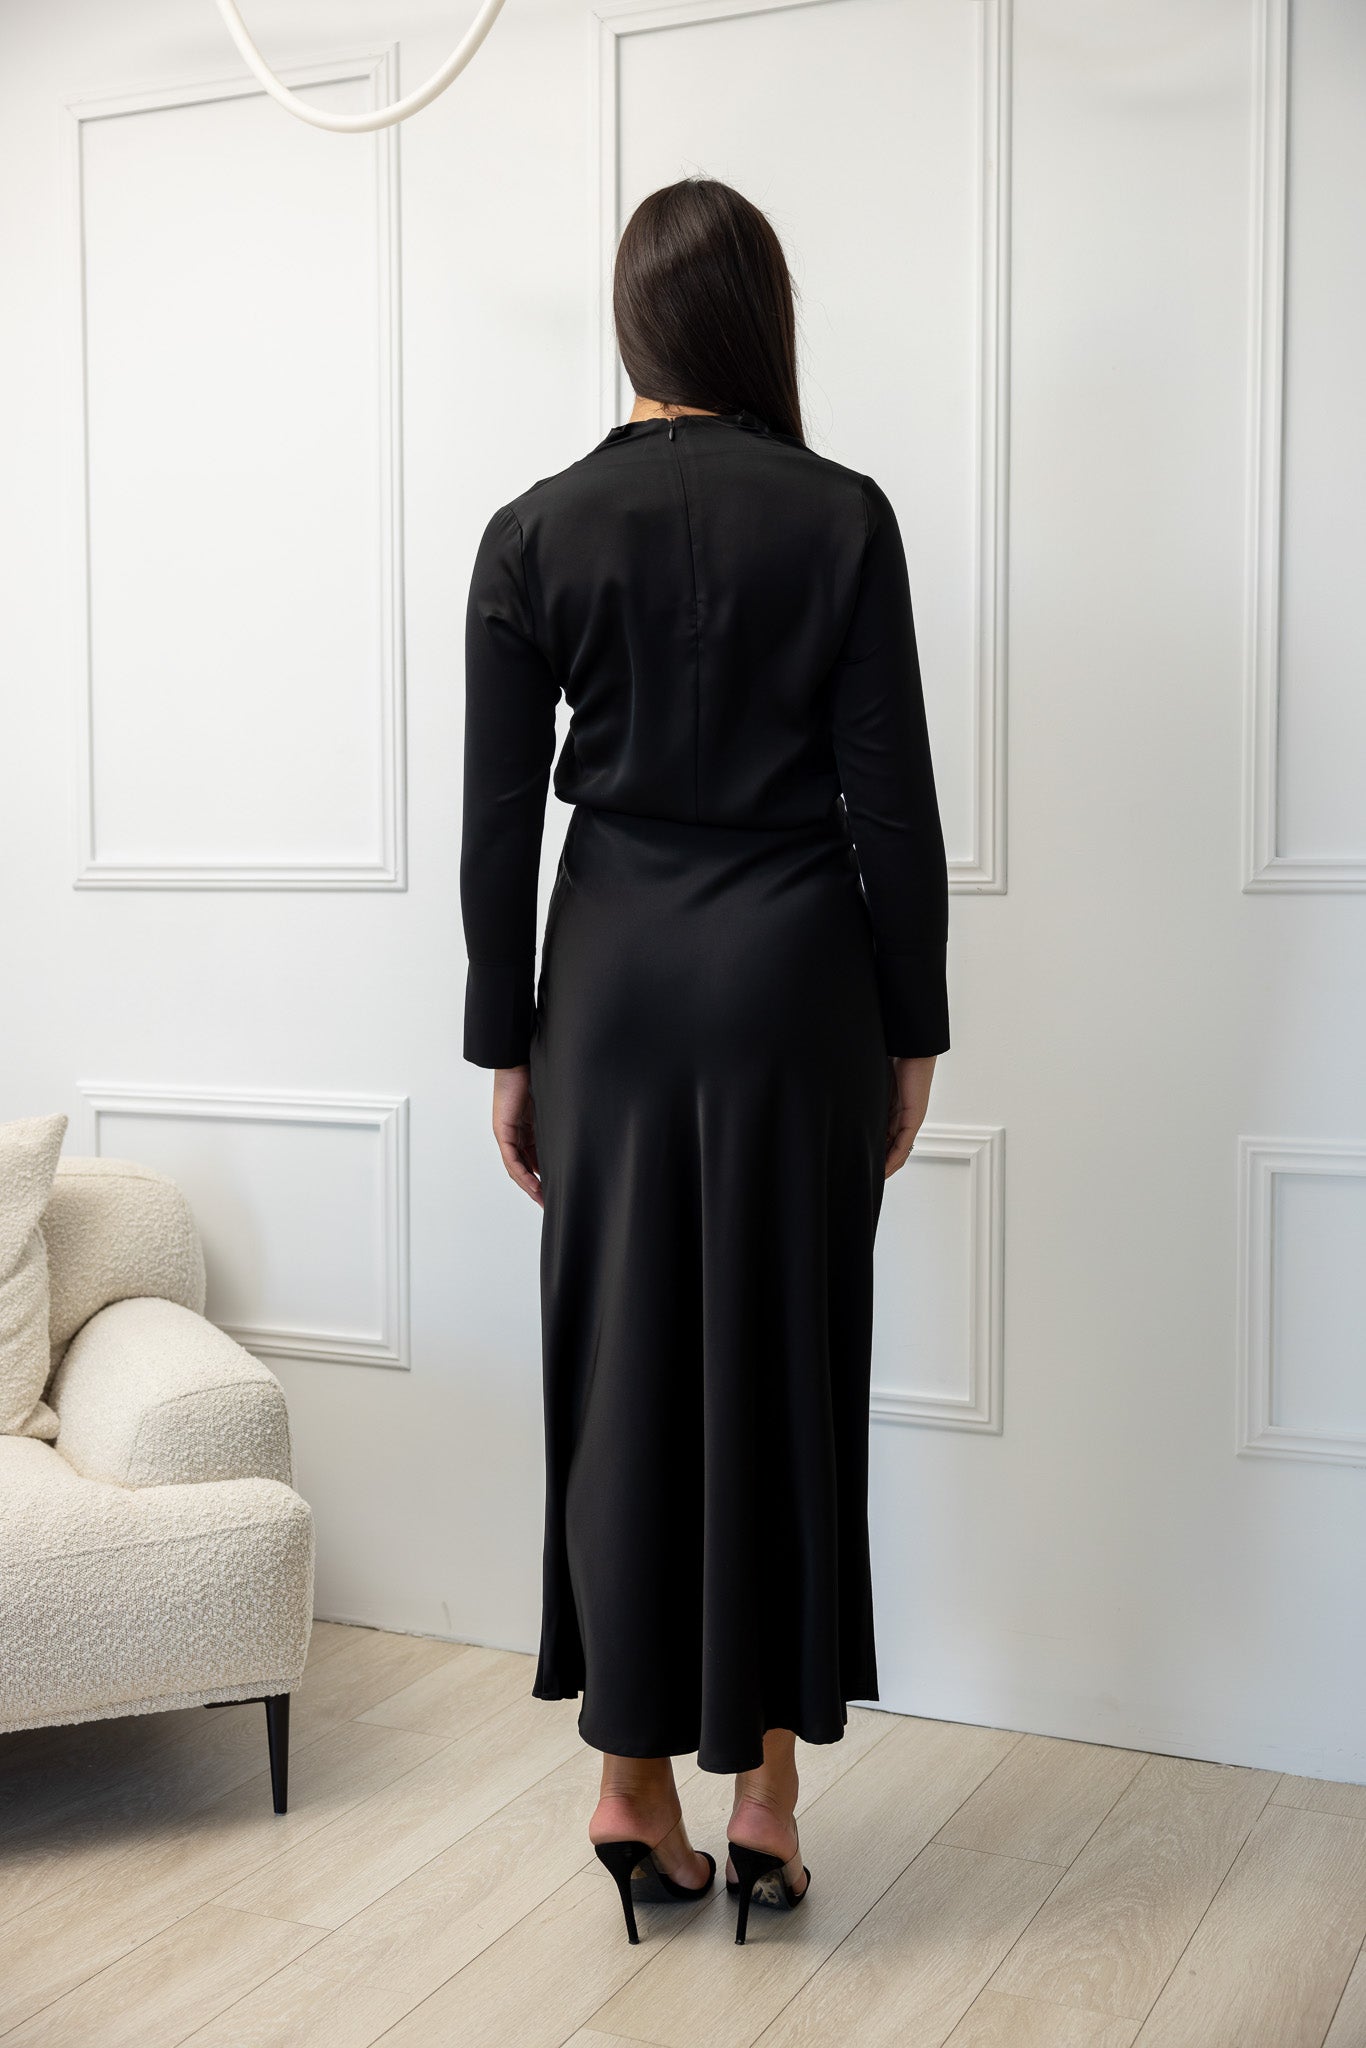 The Crescent Modish Satin Skirt - Dark Shades